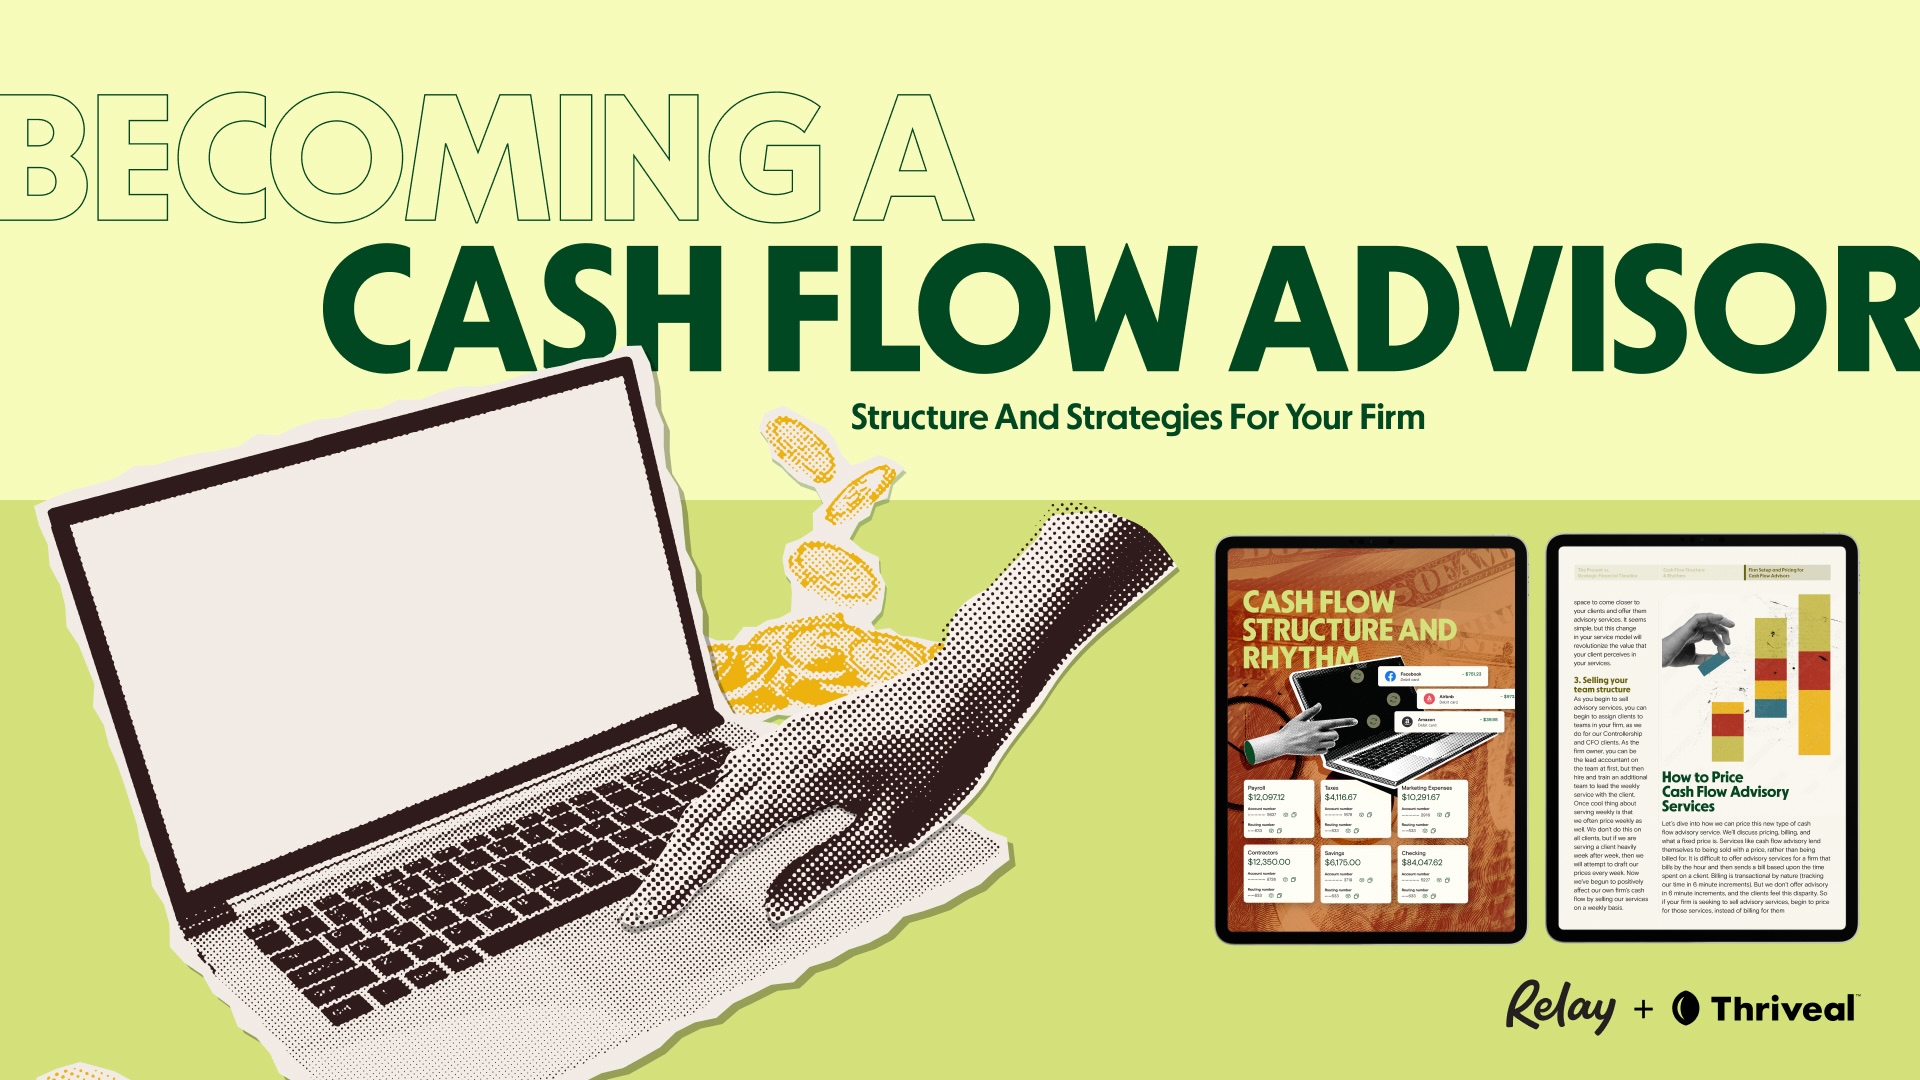 Becoming a Cash Flow Advisor - Promo Image 2